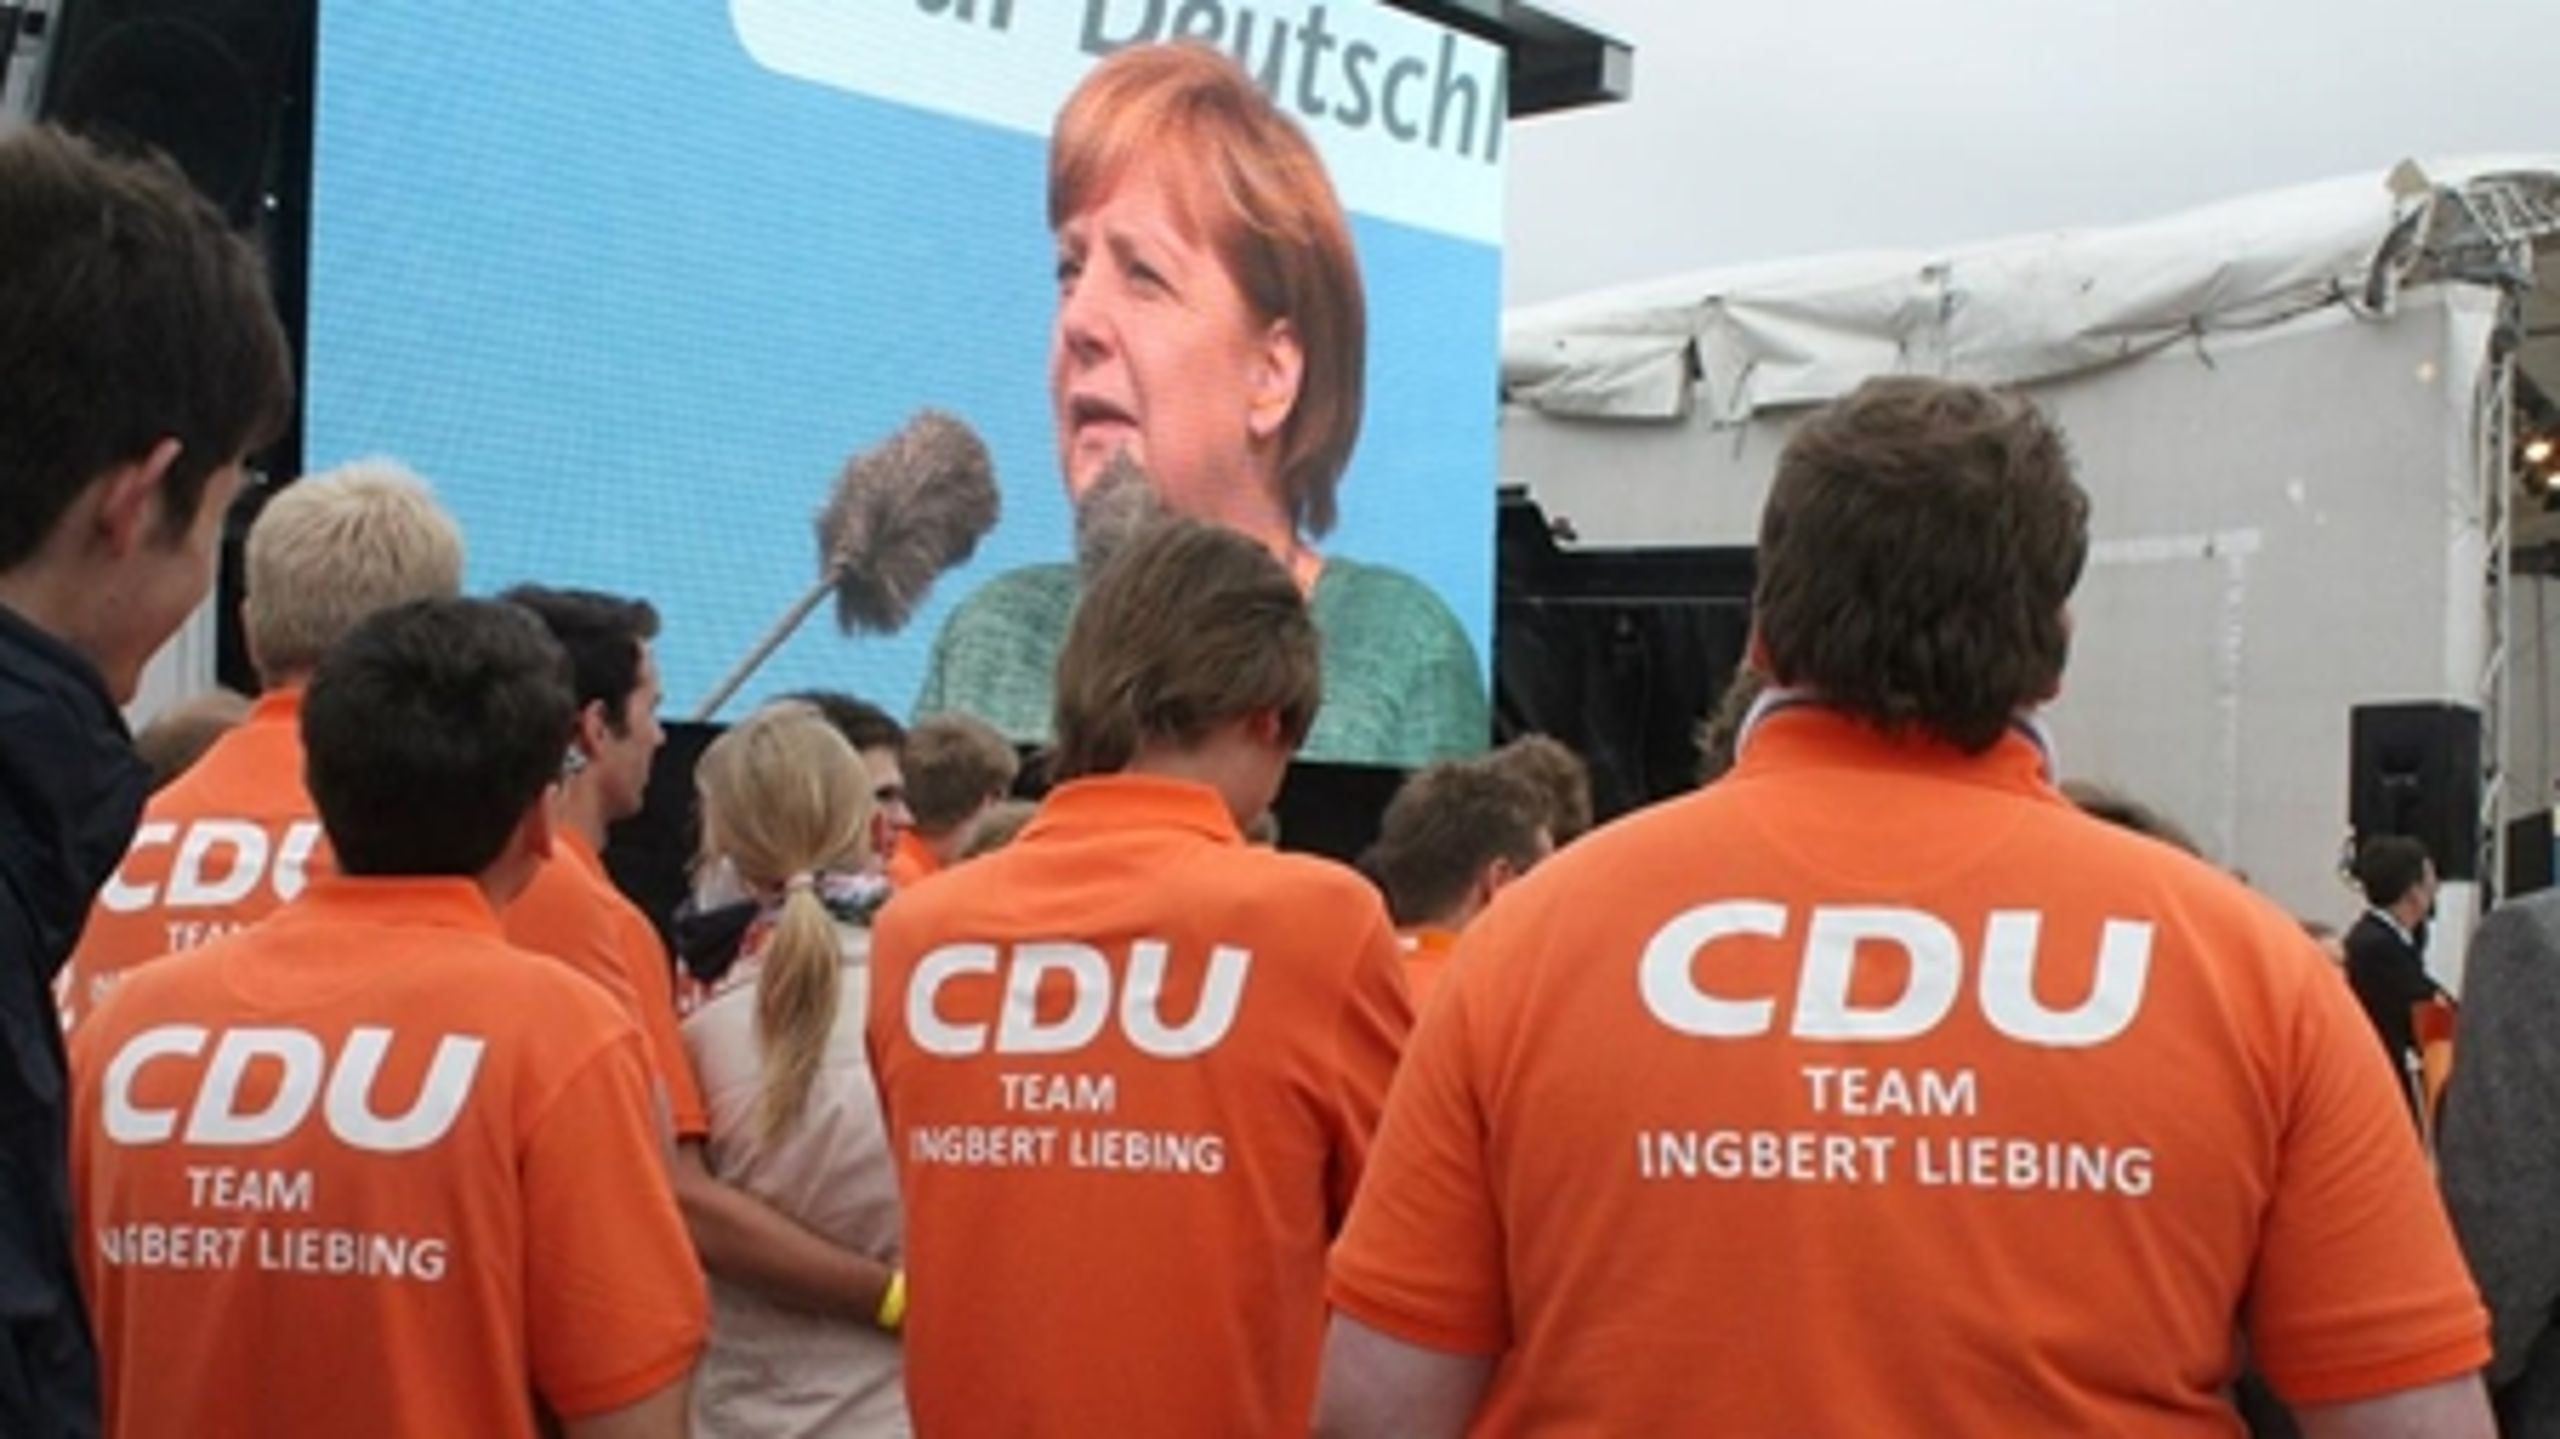 Det tyske sprog kan ifølge forsker være en hindring for at følge med i den tyske valgkamp.